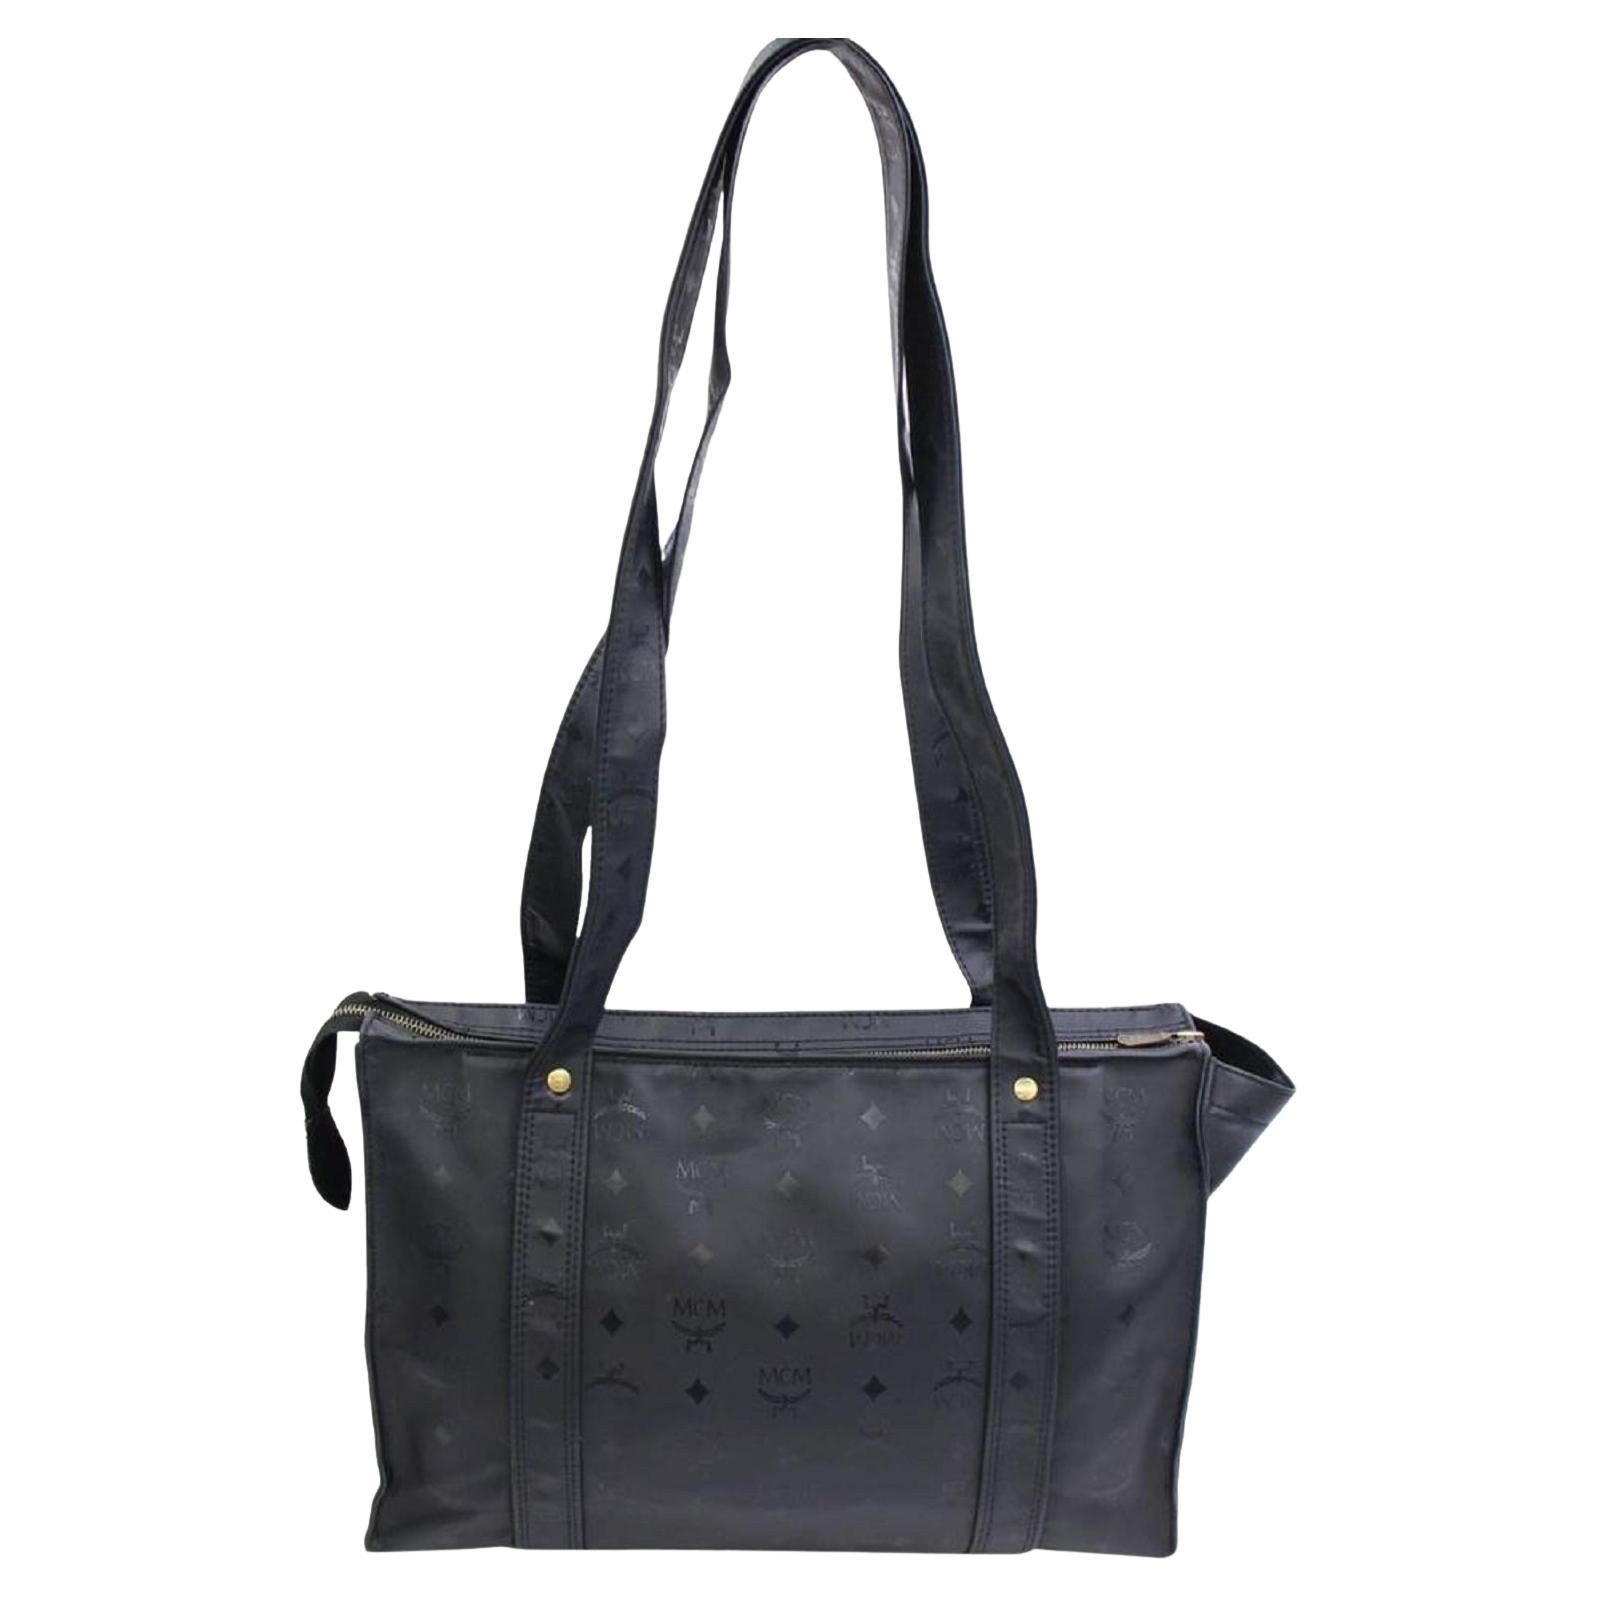 Mint. Vintage Mcm Black Monogram Large Shopper Tote Bag, Shoulder Bag. Unisex Use As Classic Style in originality. Handmade in Germany